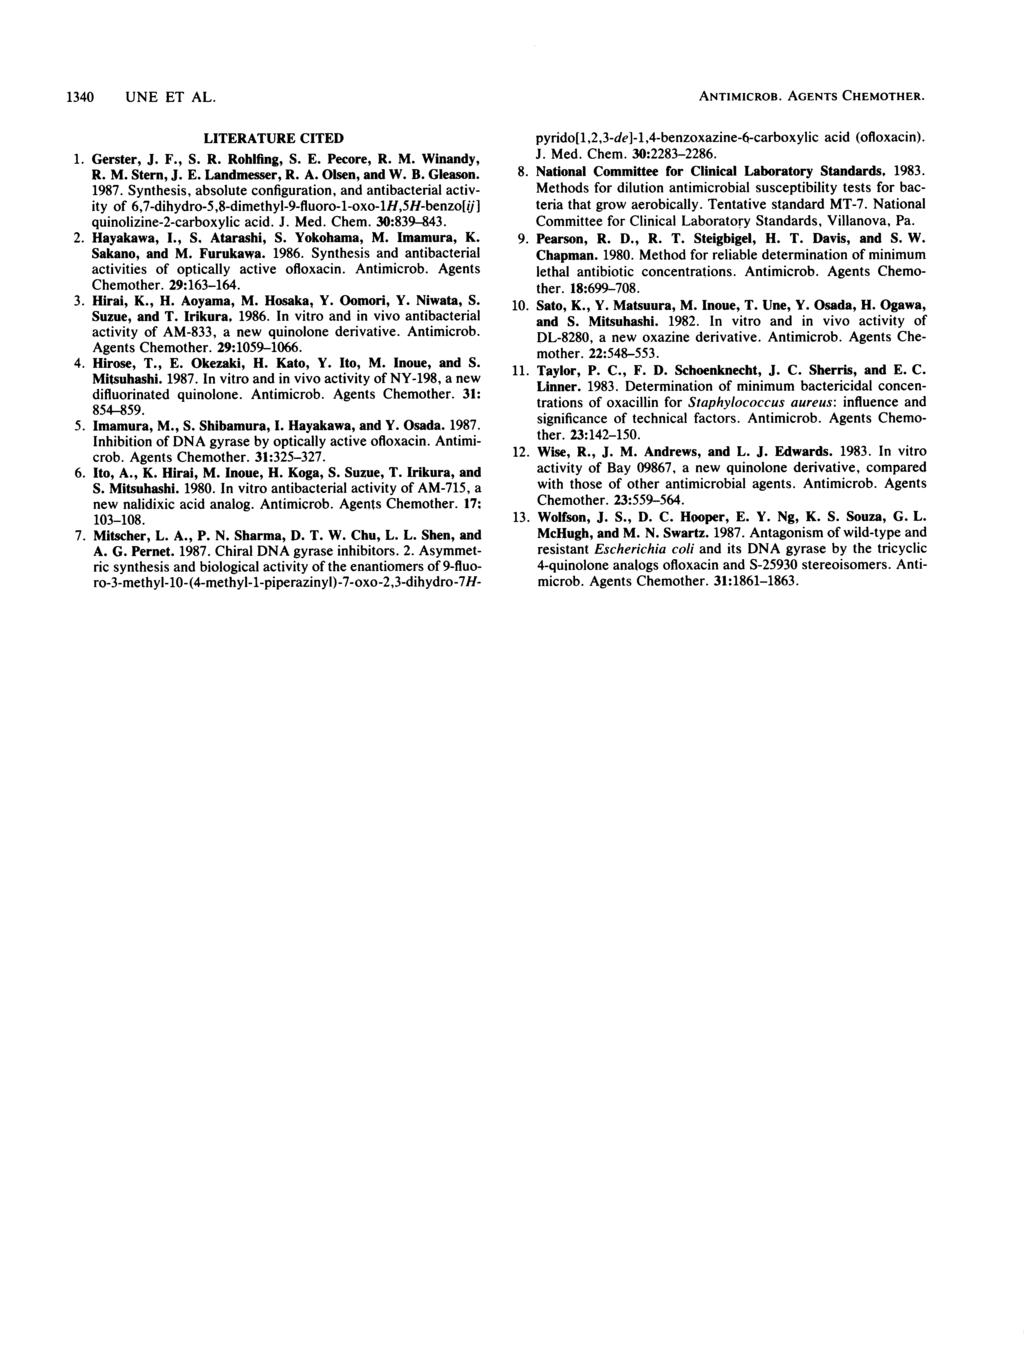 1340 UNE ET AL. ANTIMICROB. AGENTS CHEMOTHER. LITERATURE CITED 1. Gerster, J. F., S. R. Rohlfing, S. E. Pecore, R. M. Winandy, R. M. Stern, J. E. Landmesser, R. A. Olsen, and W. B. Gleason. 1987.